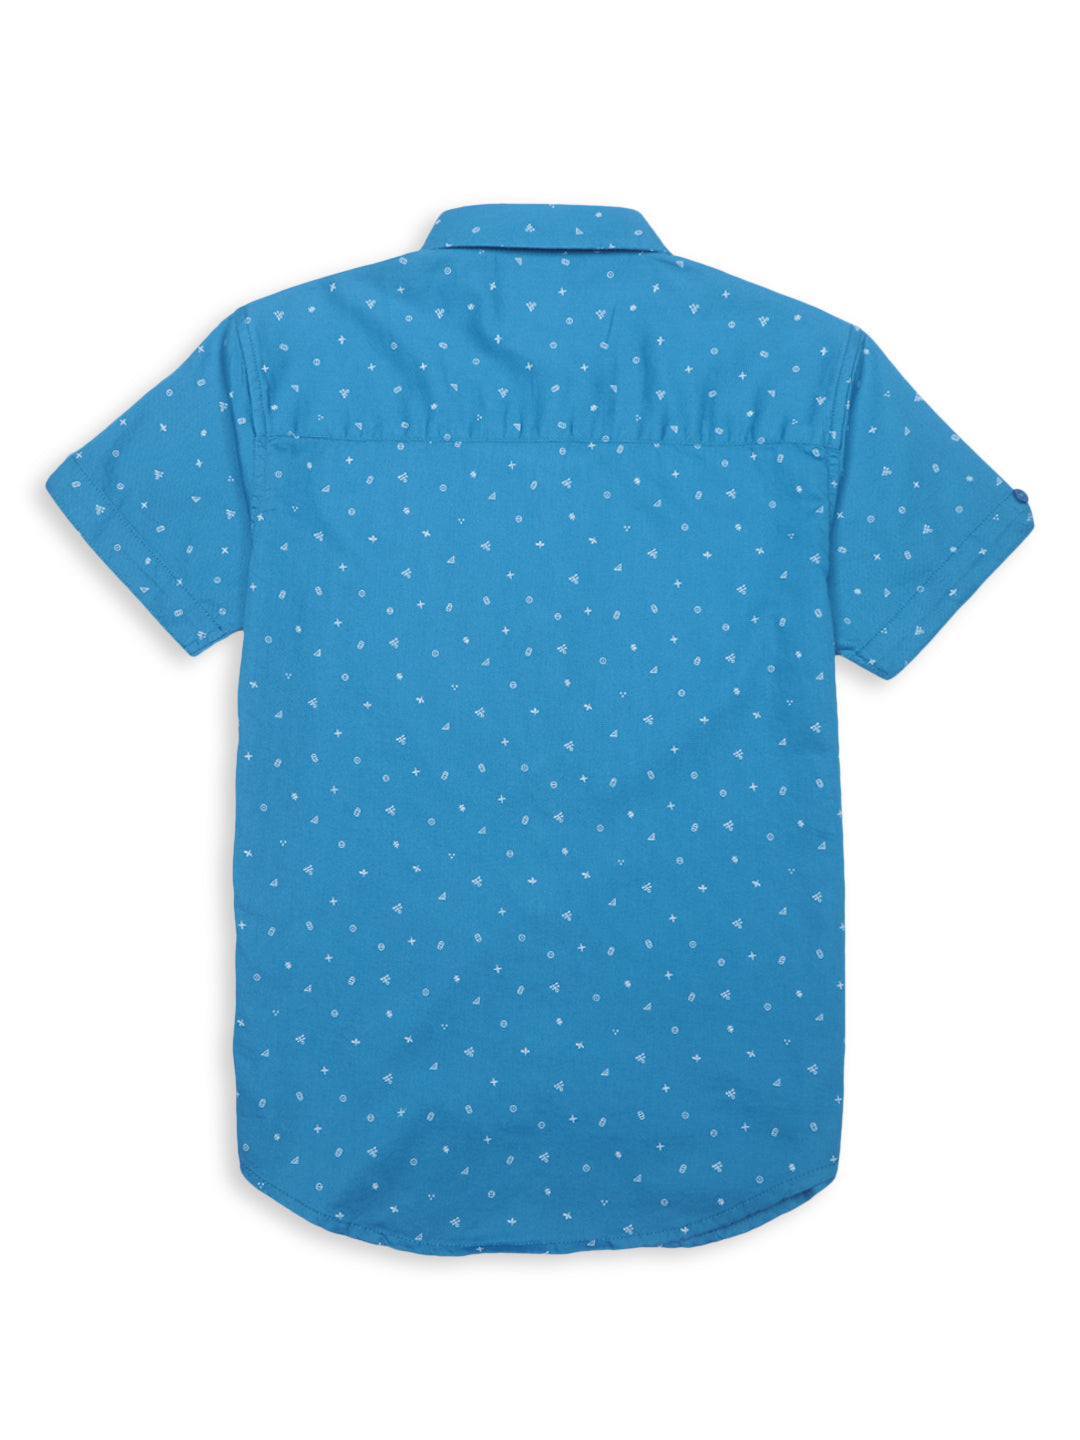 Boys Blue Cotton Printed Shirt